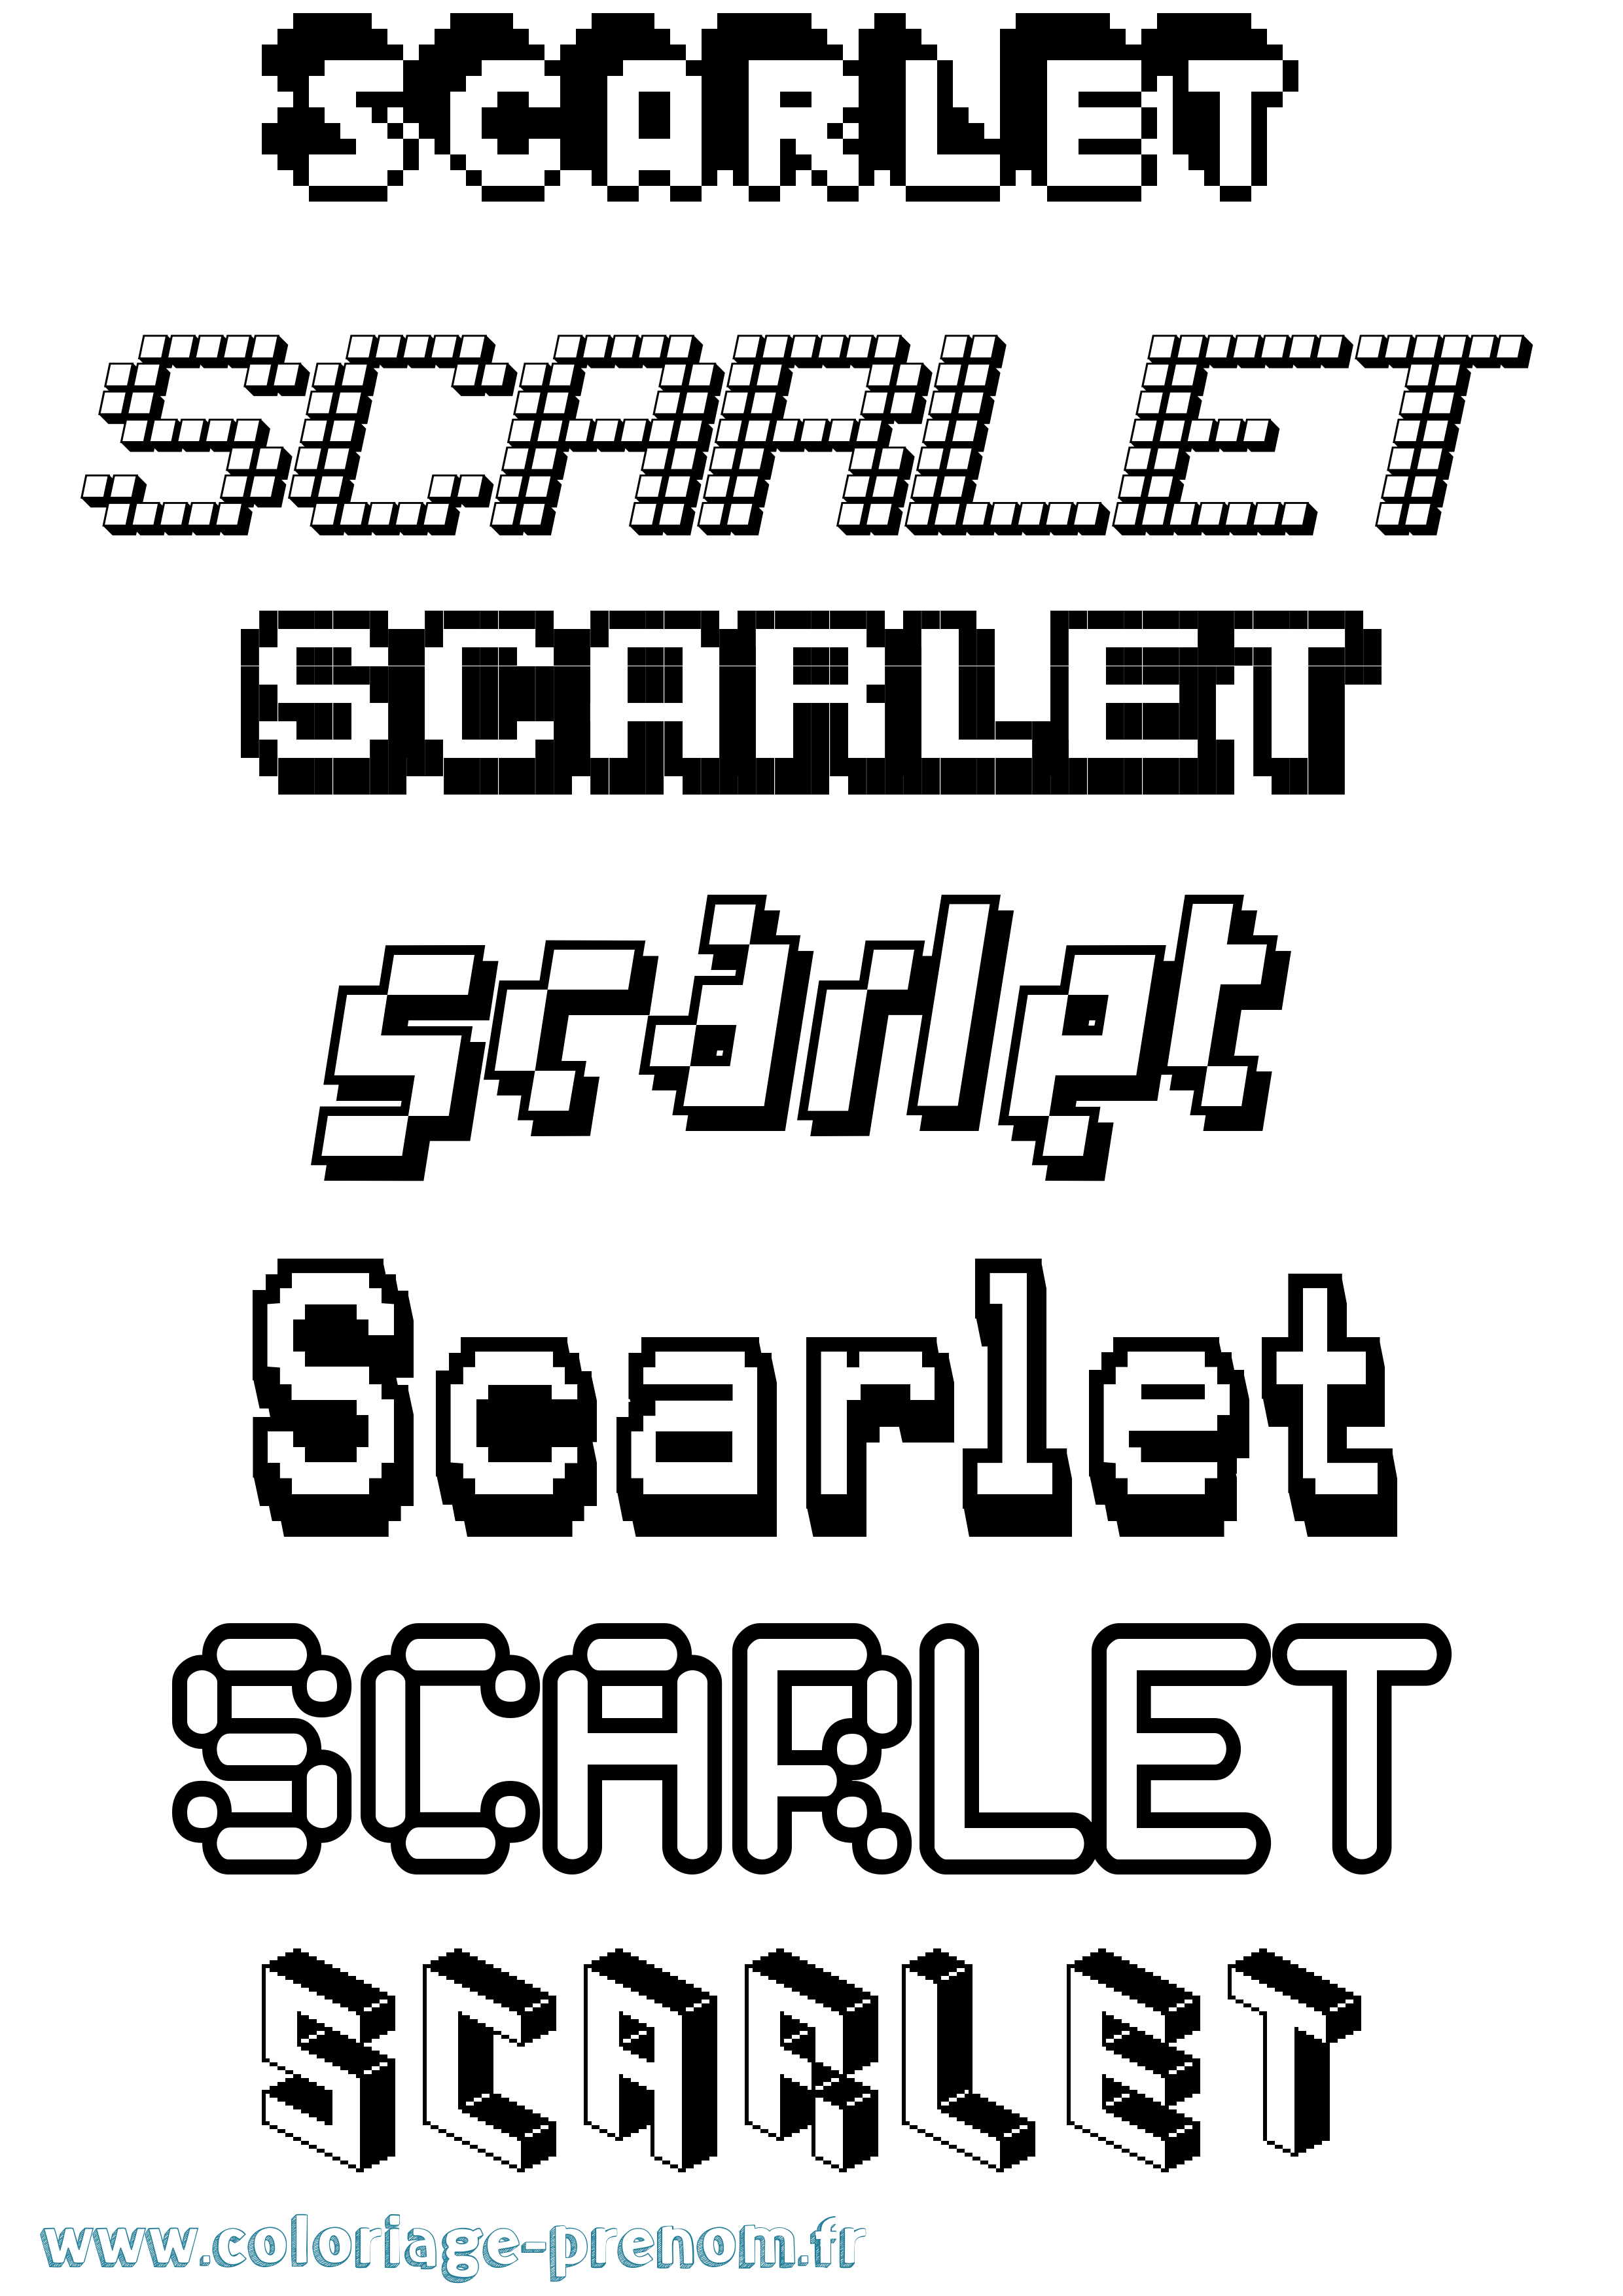 Coloriage prénom Scarlet Pixel